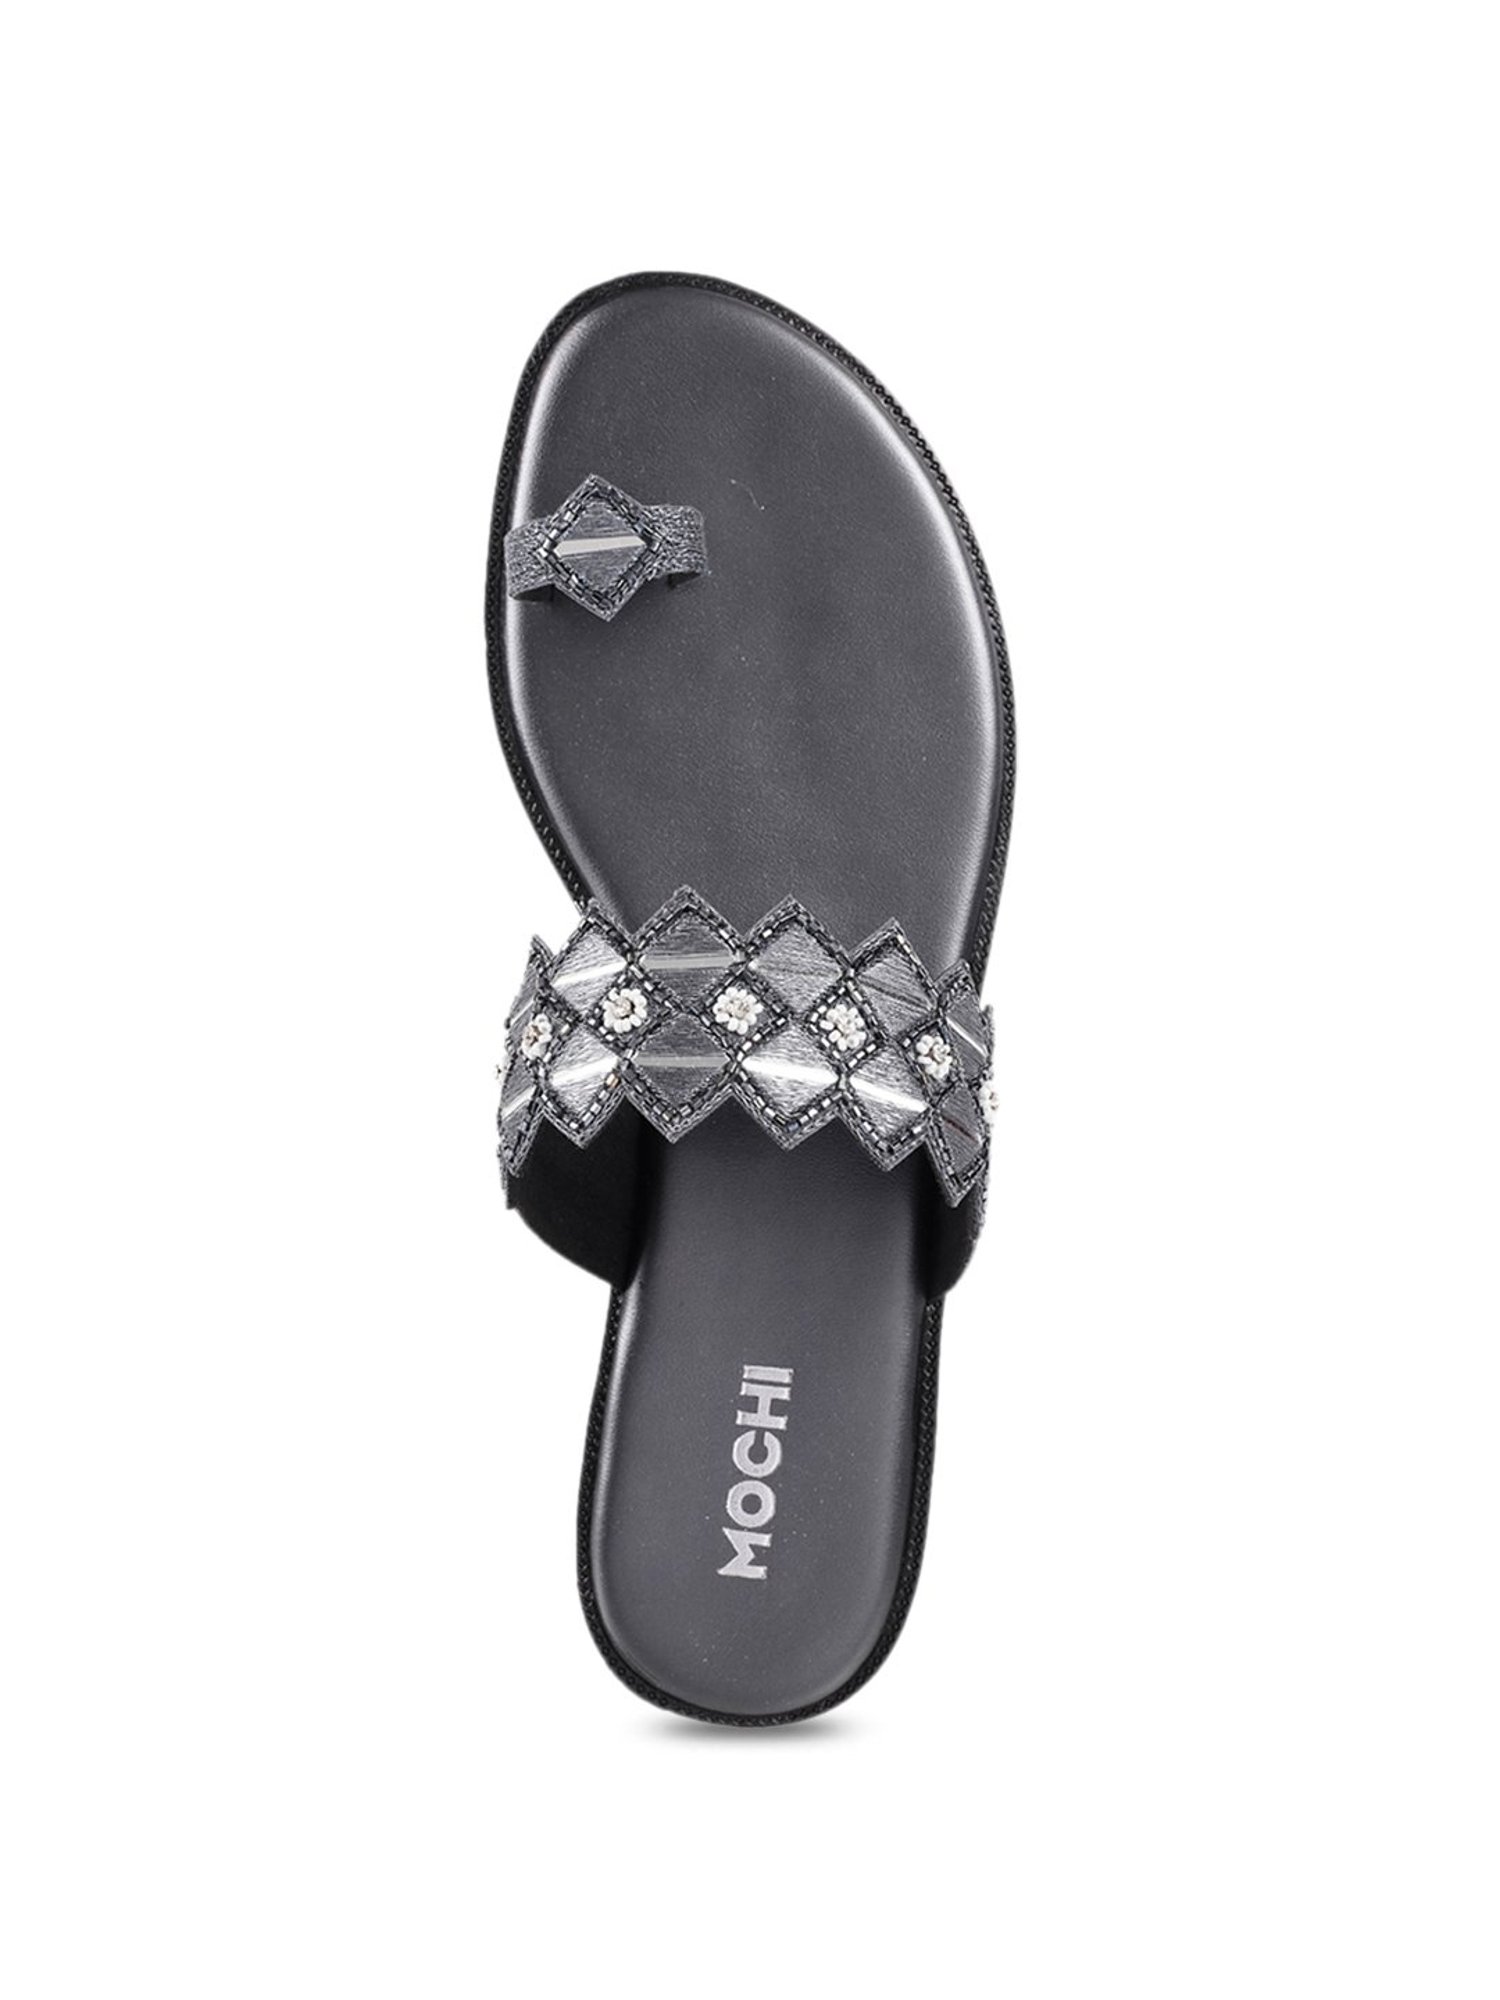 Buy Mochi Gun Metal Toe Ring Sandals for Women at Best Price @ Tata CLiQ